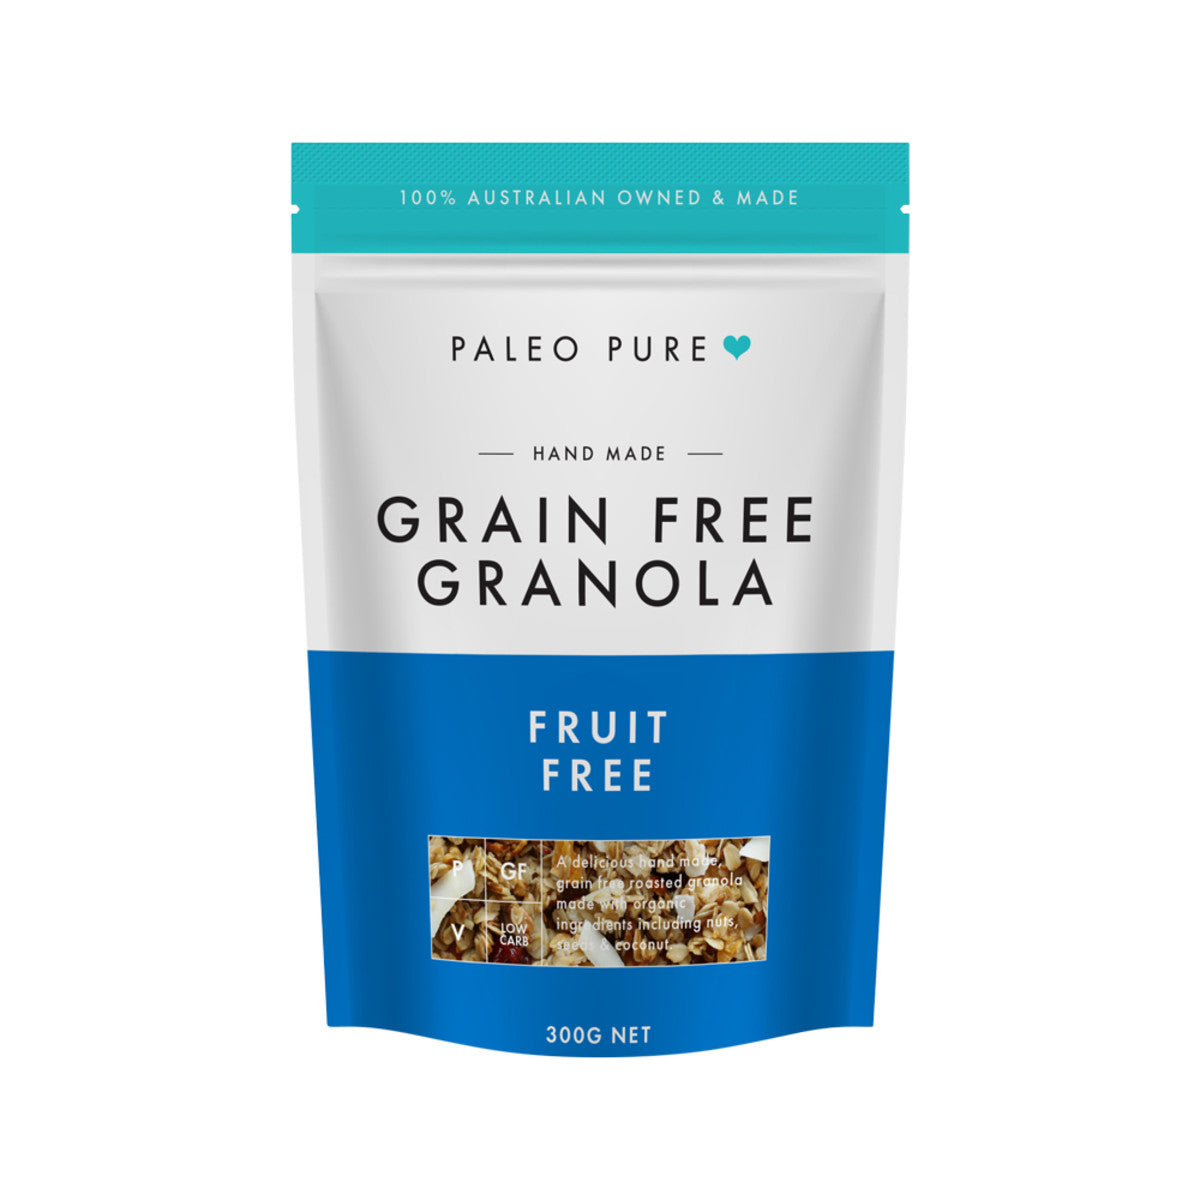 Paleo Pure Org Grain Free Granola Raw Fruit Free 300g